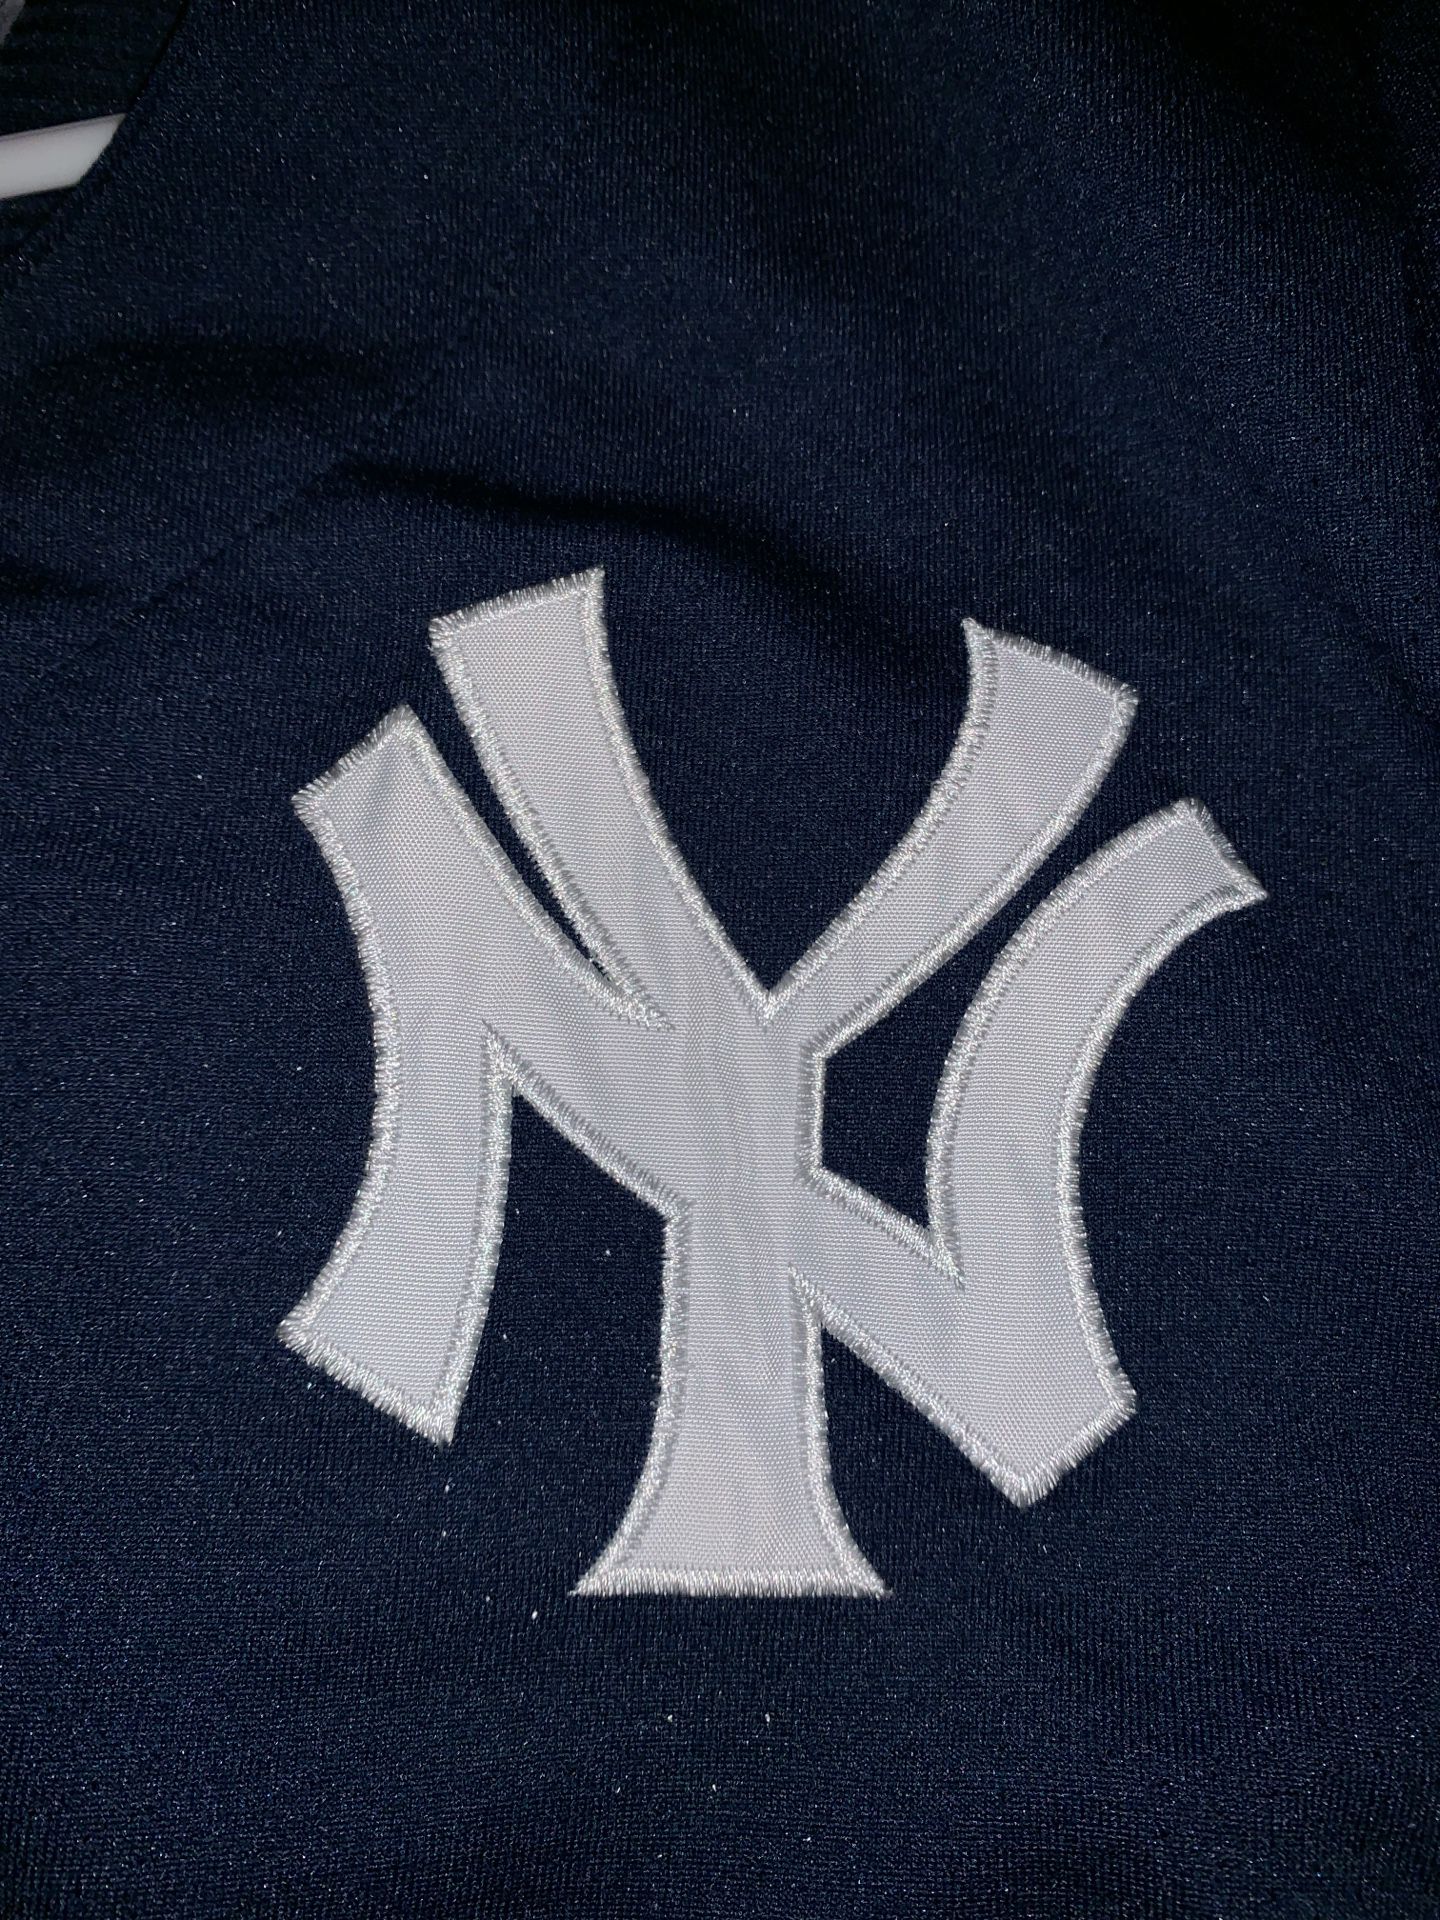 LV x Sup Denim Jacquard Blue Jeans Baseball Jersey Red Men's Medium L for  Sale in Jersey City, NJ - OfferUp